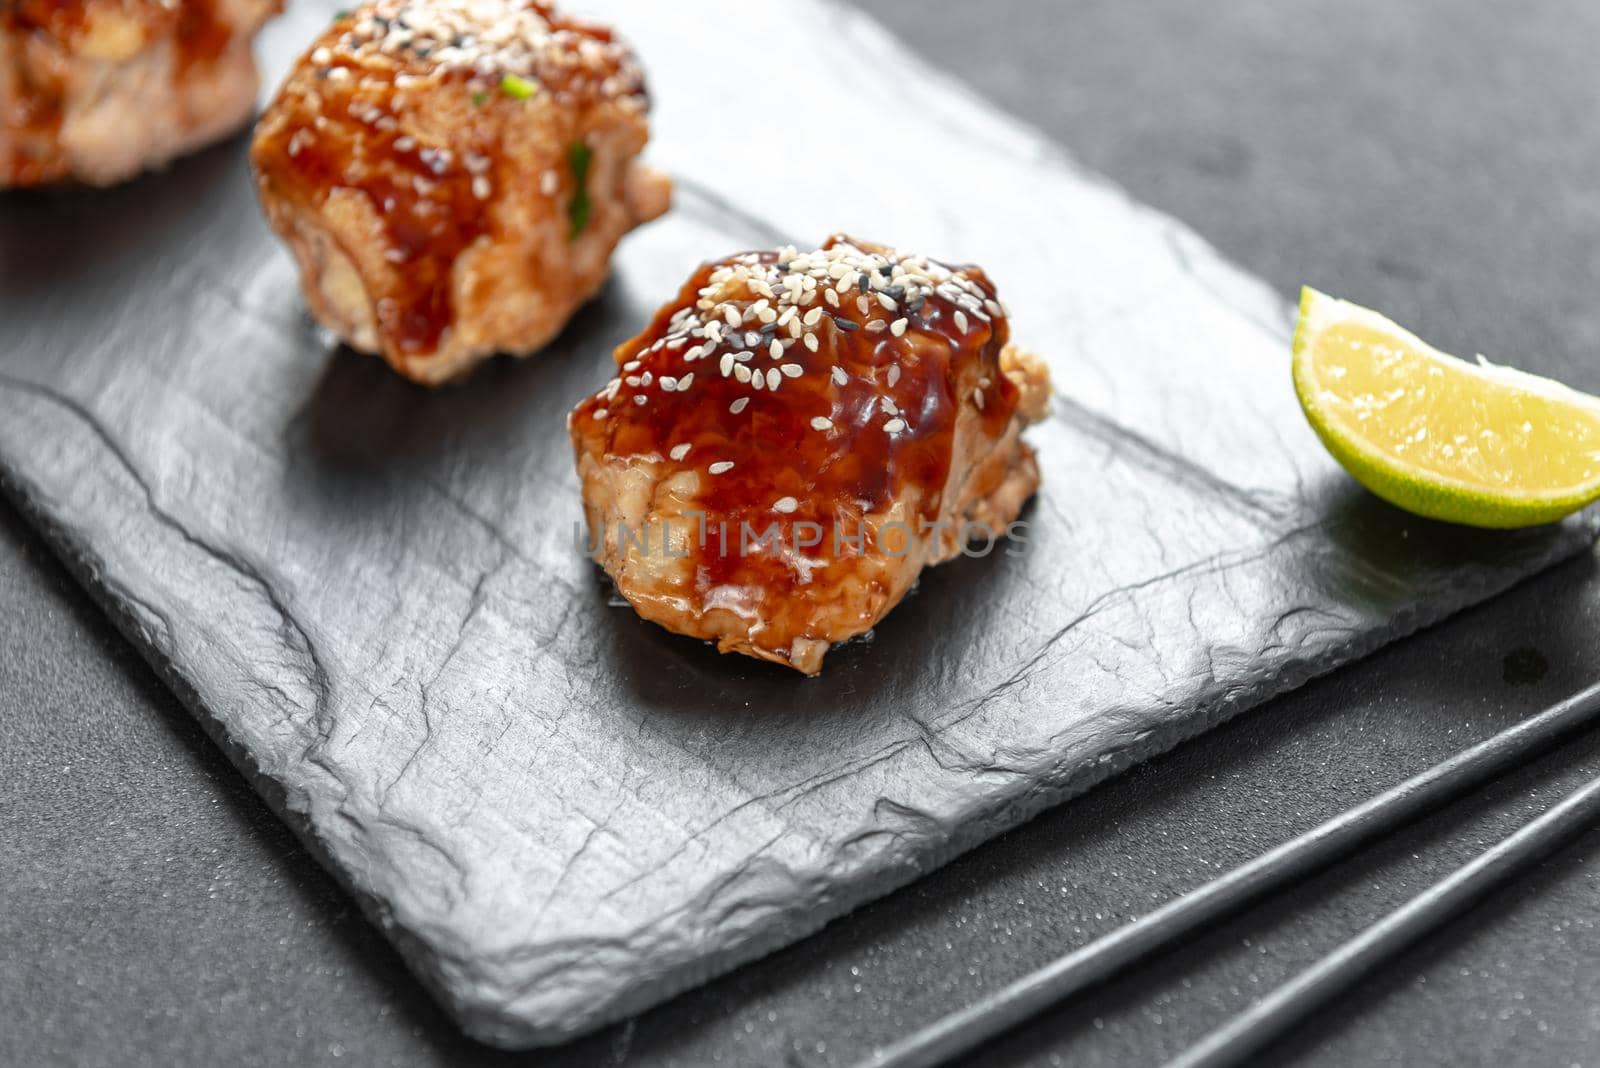 teriyaki chicken on a slate with sesame seeds. Asian Cuisine by gulyaevstudio